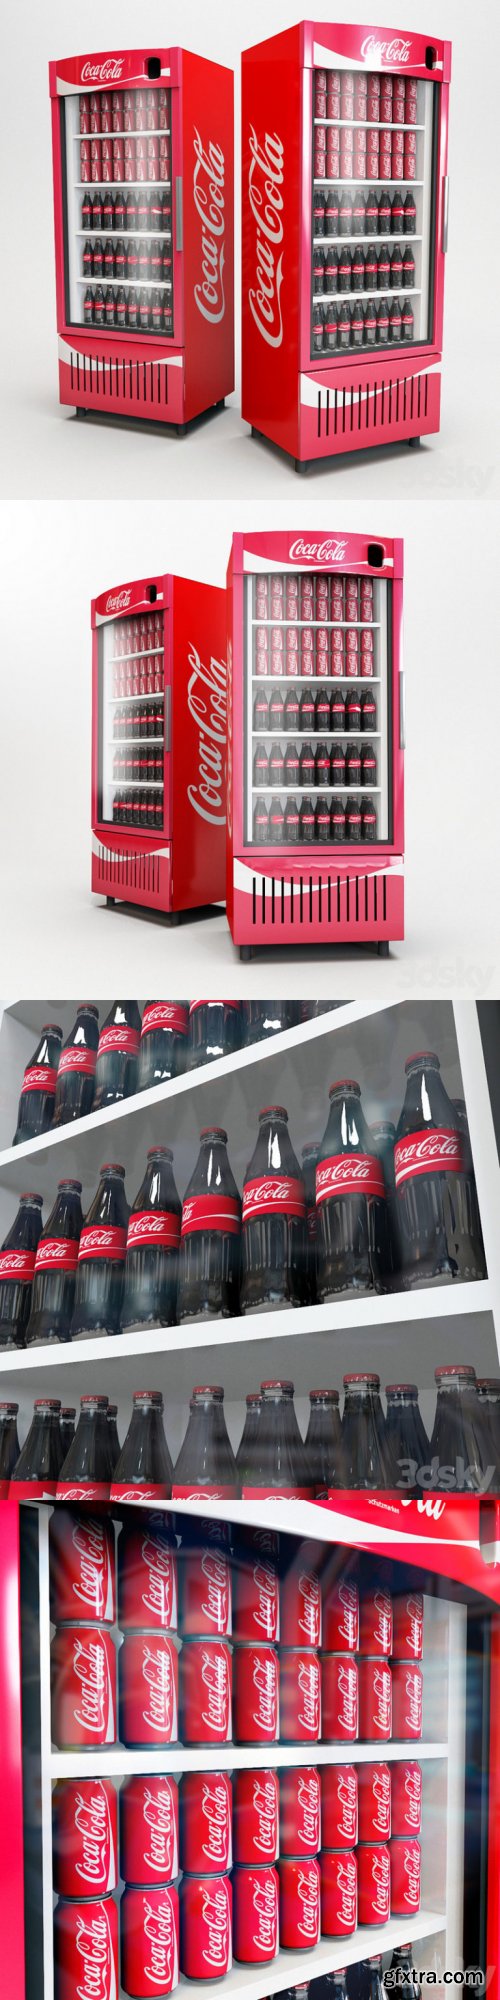 Coca-Cola Undercounter Drinks Cooler